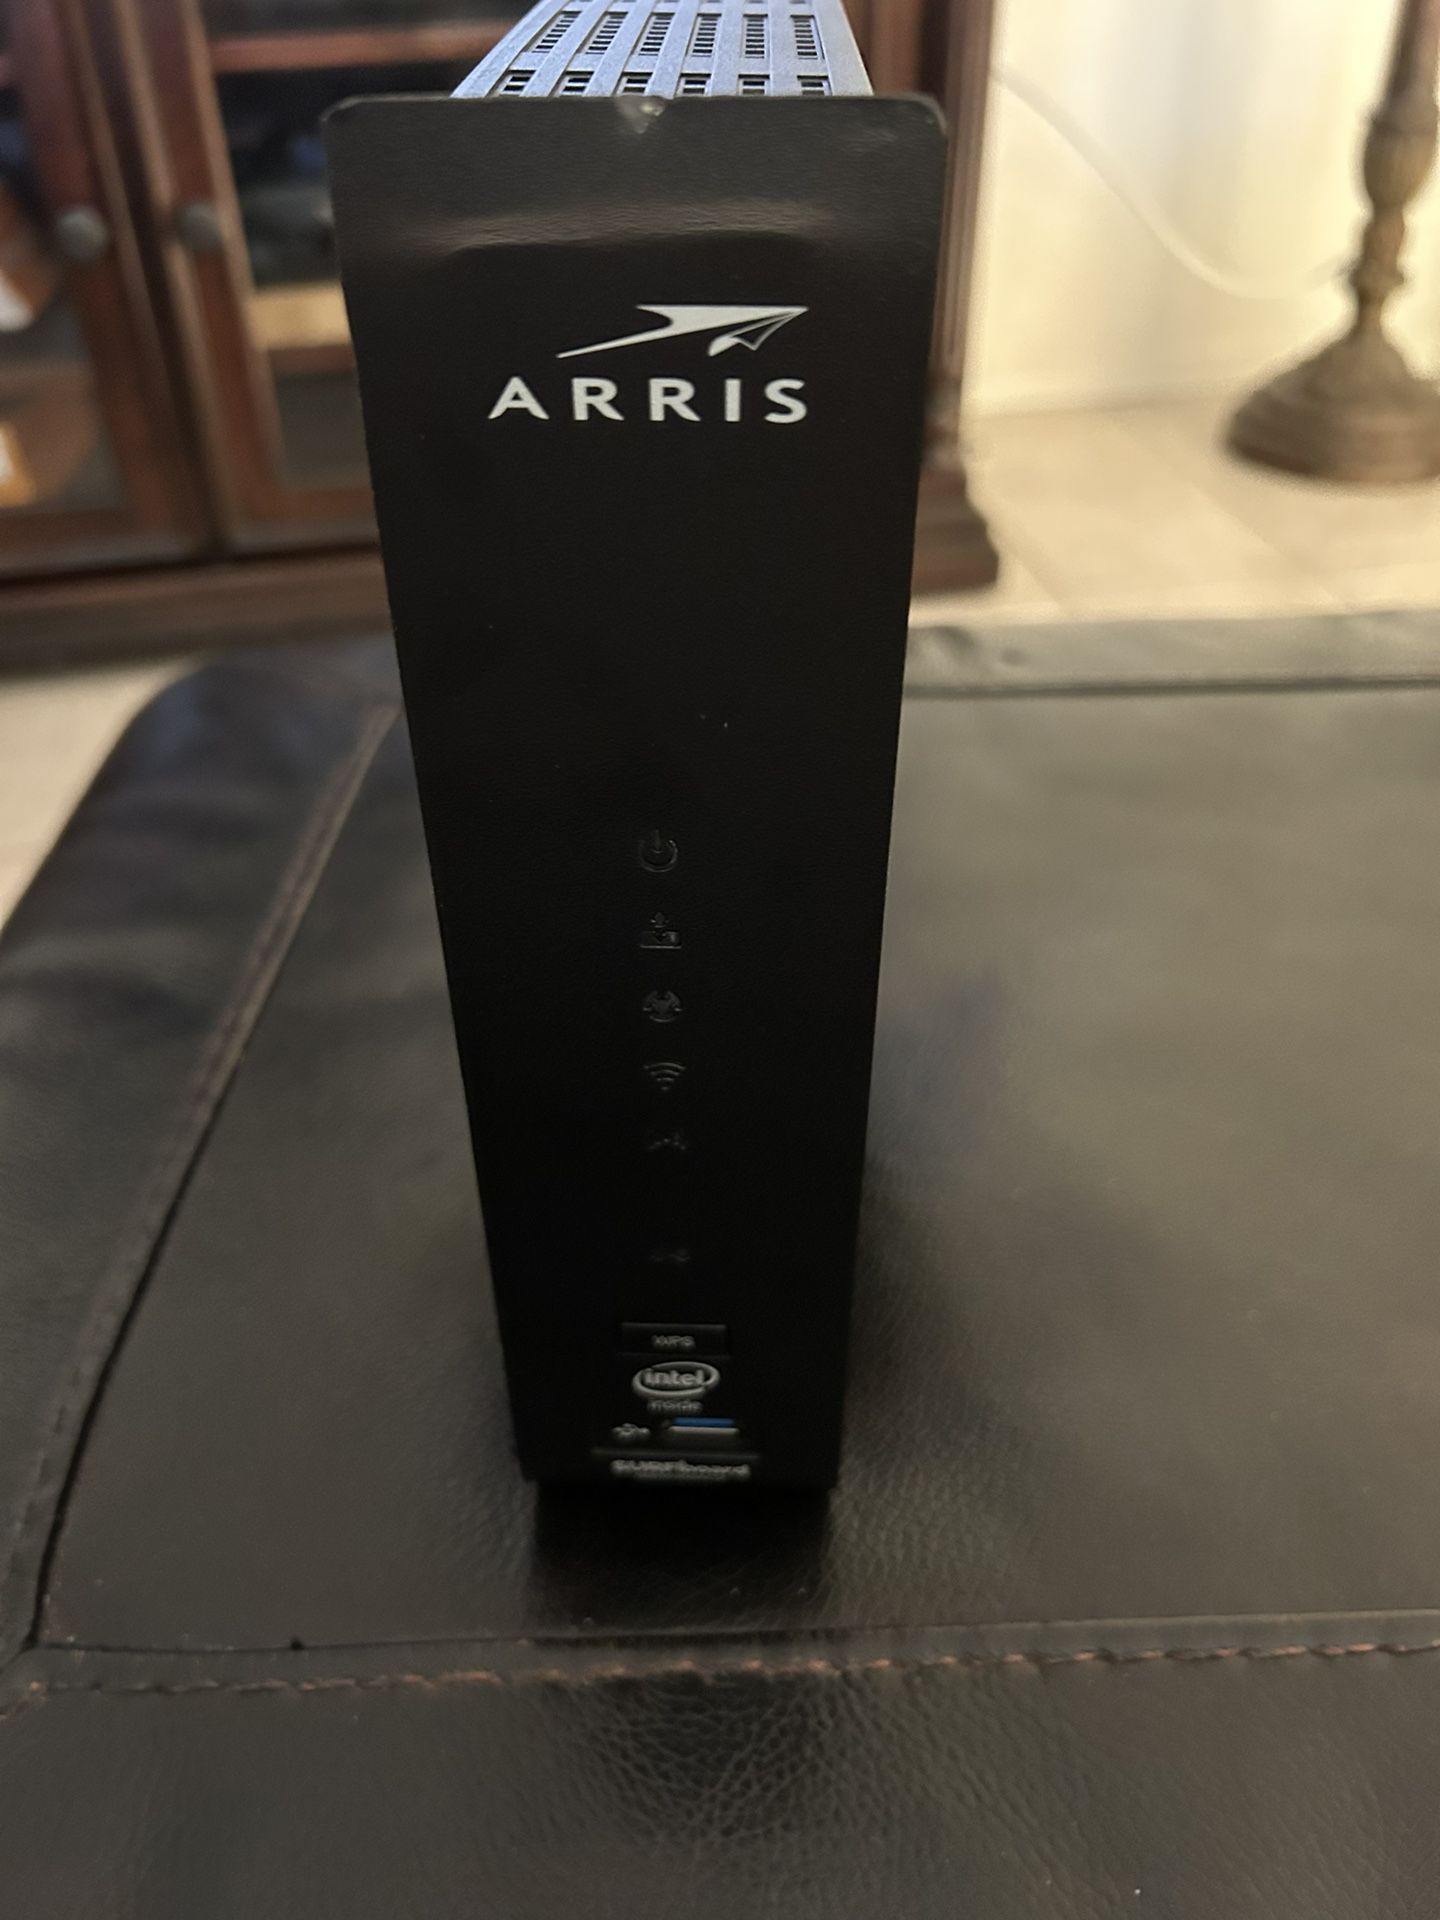 Arris - Wi-Fi 2.4GHz Router/Modem